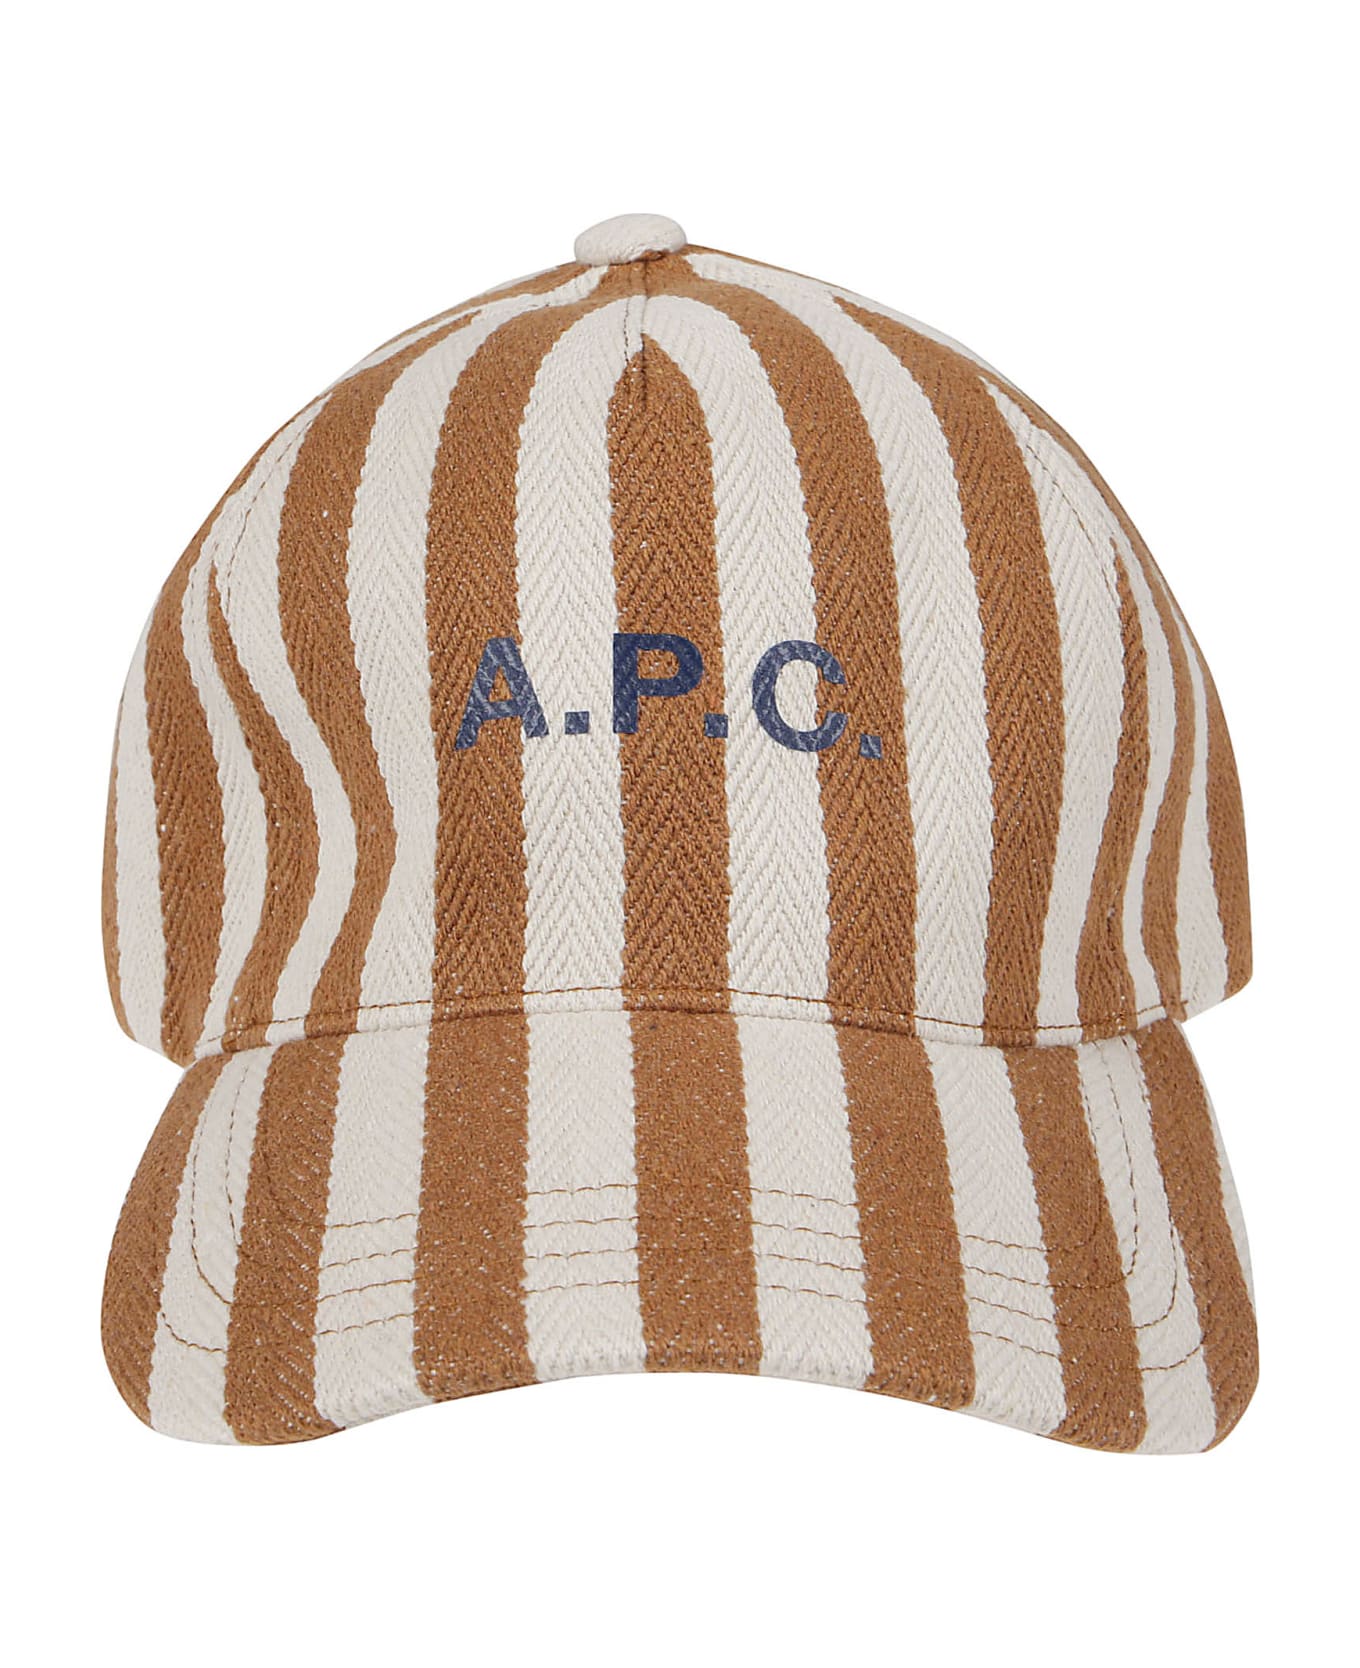 A.P.C. Logo Printed Curved Peak Baseball Cap - Caf Caramel